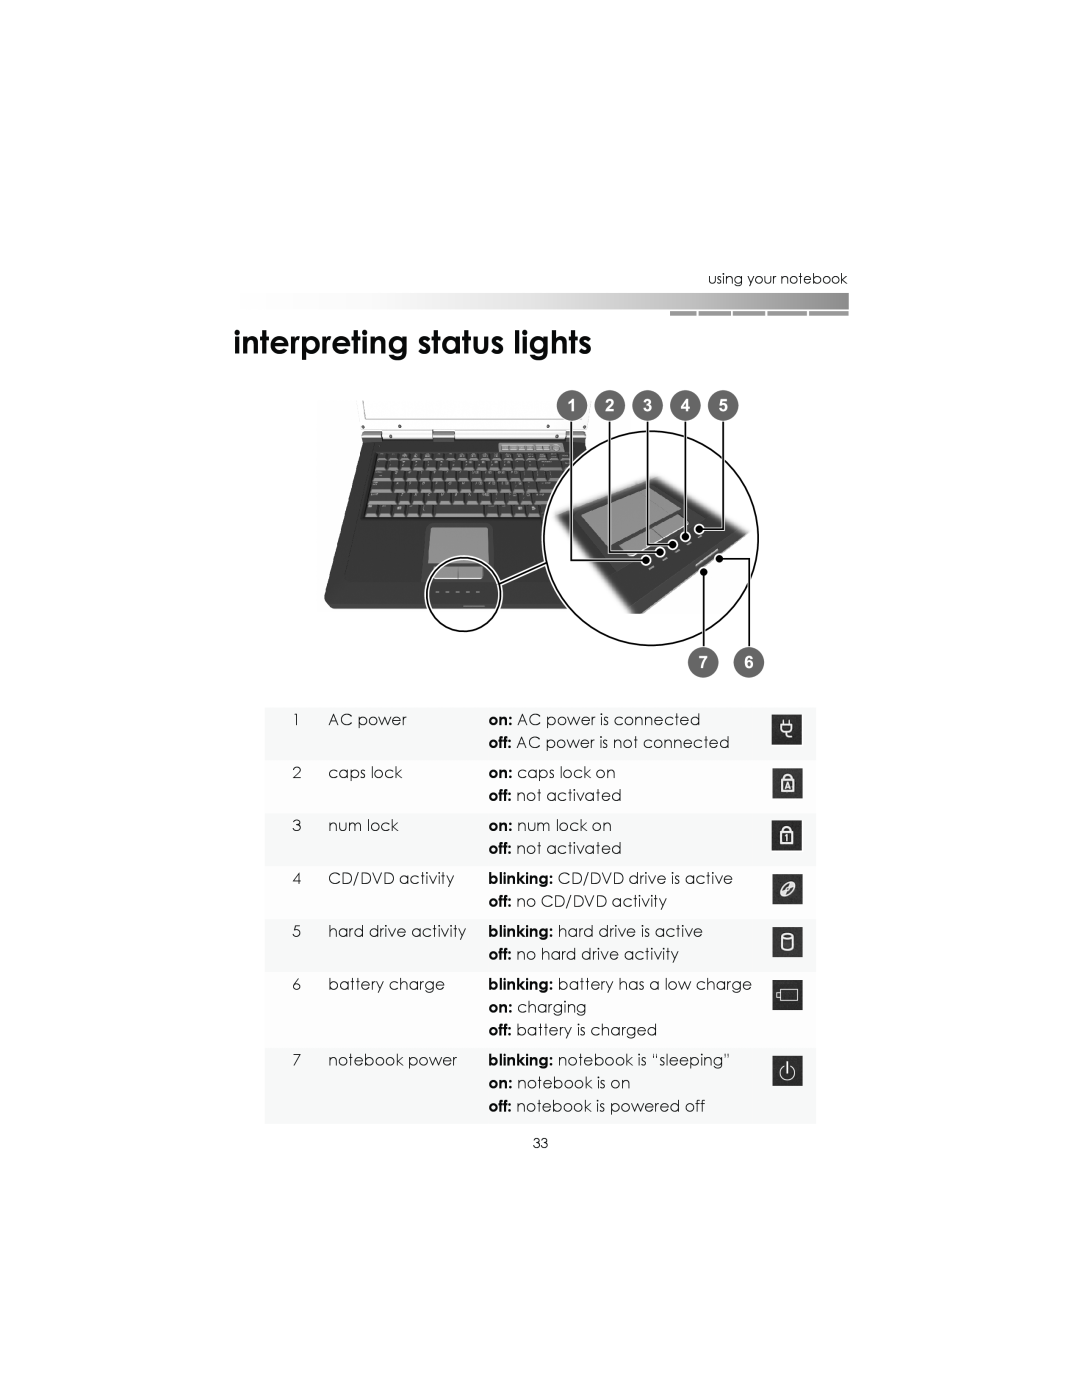 eMachines AAFW53700001K0 manual interpreting status lights 